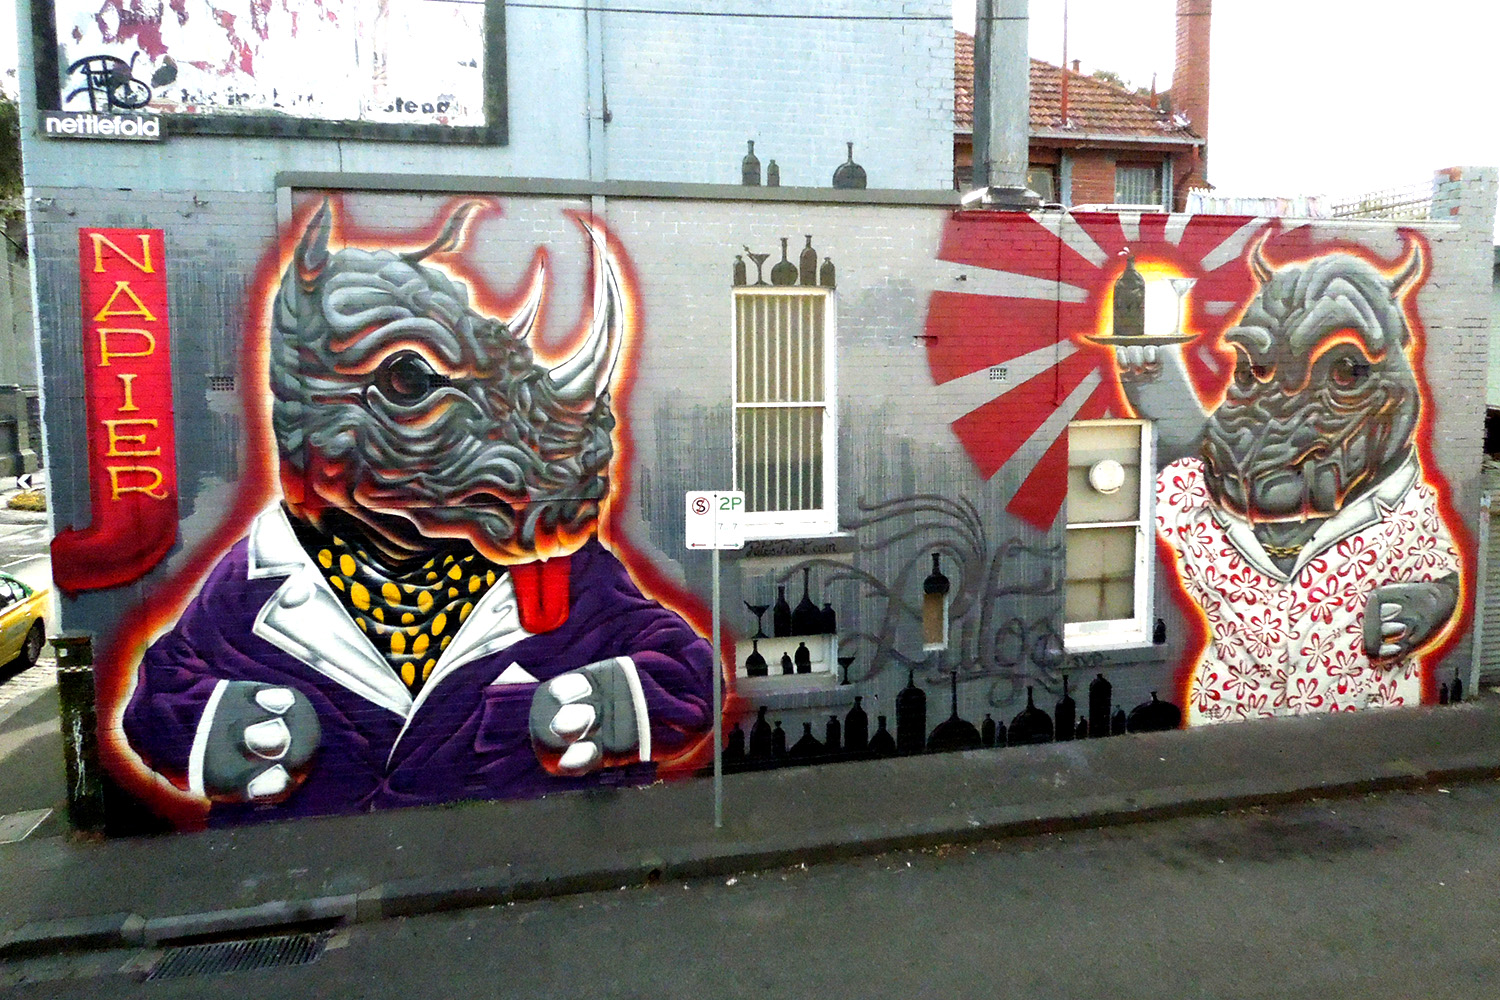 Putos Melbourne Street Art